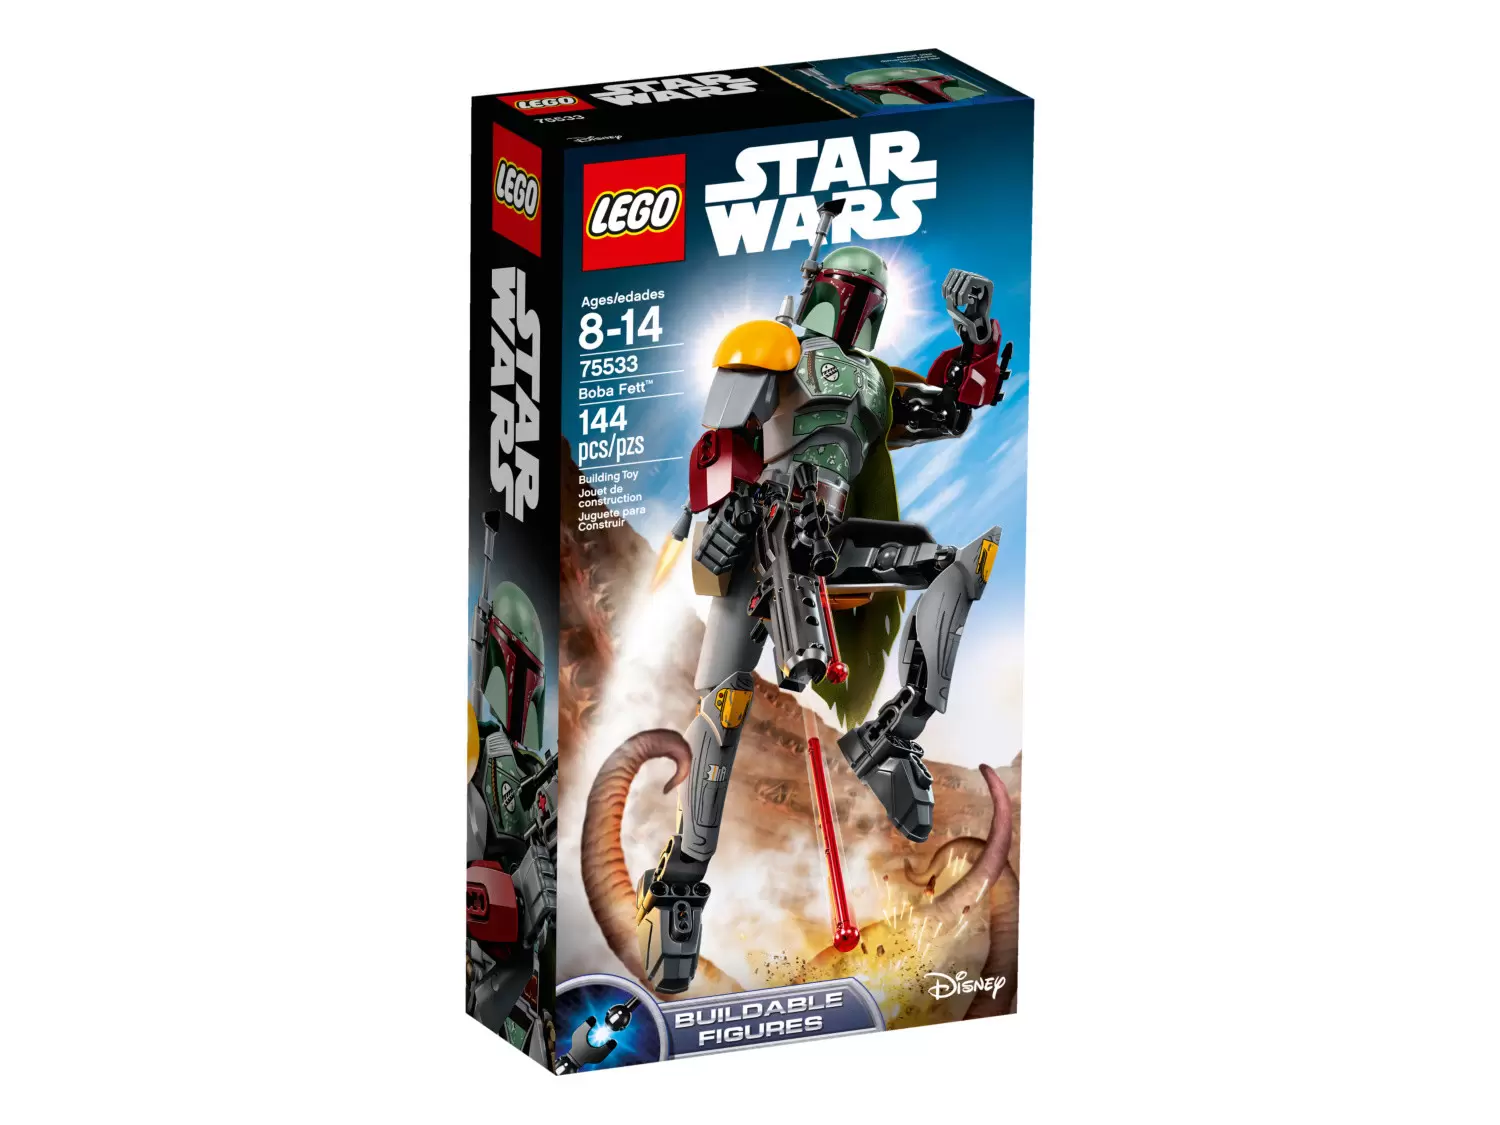 LEGO Star Wars - Boba Fett - Buildable Figure